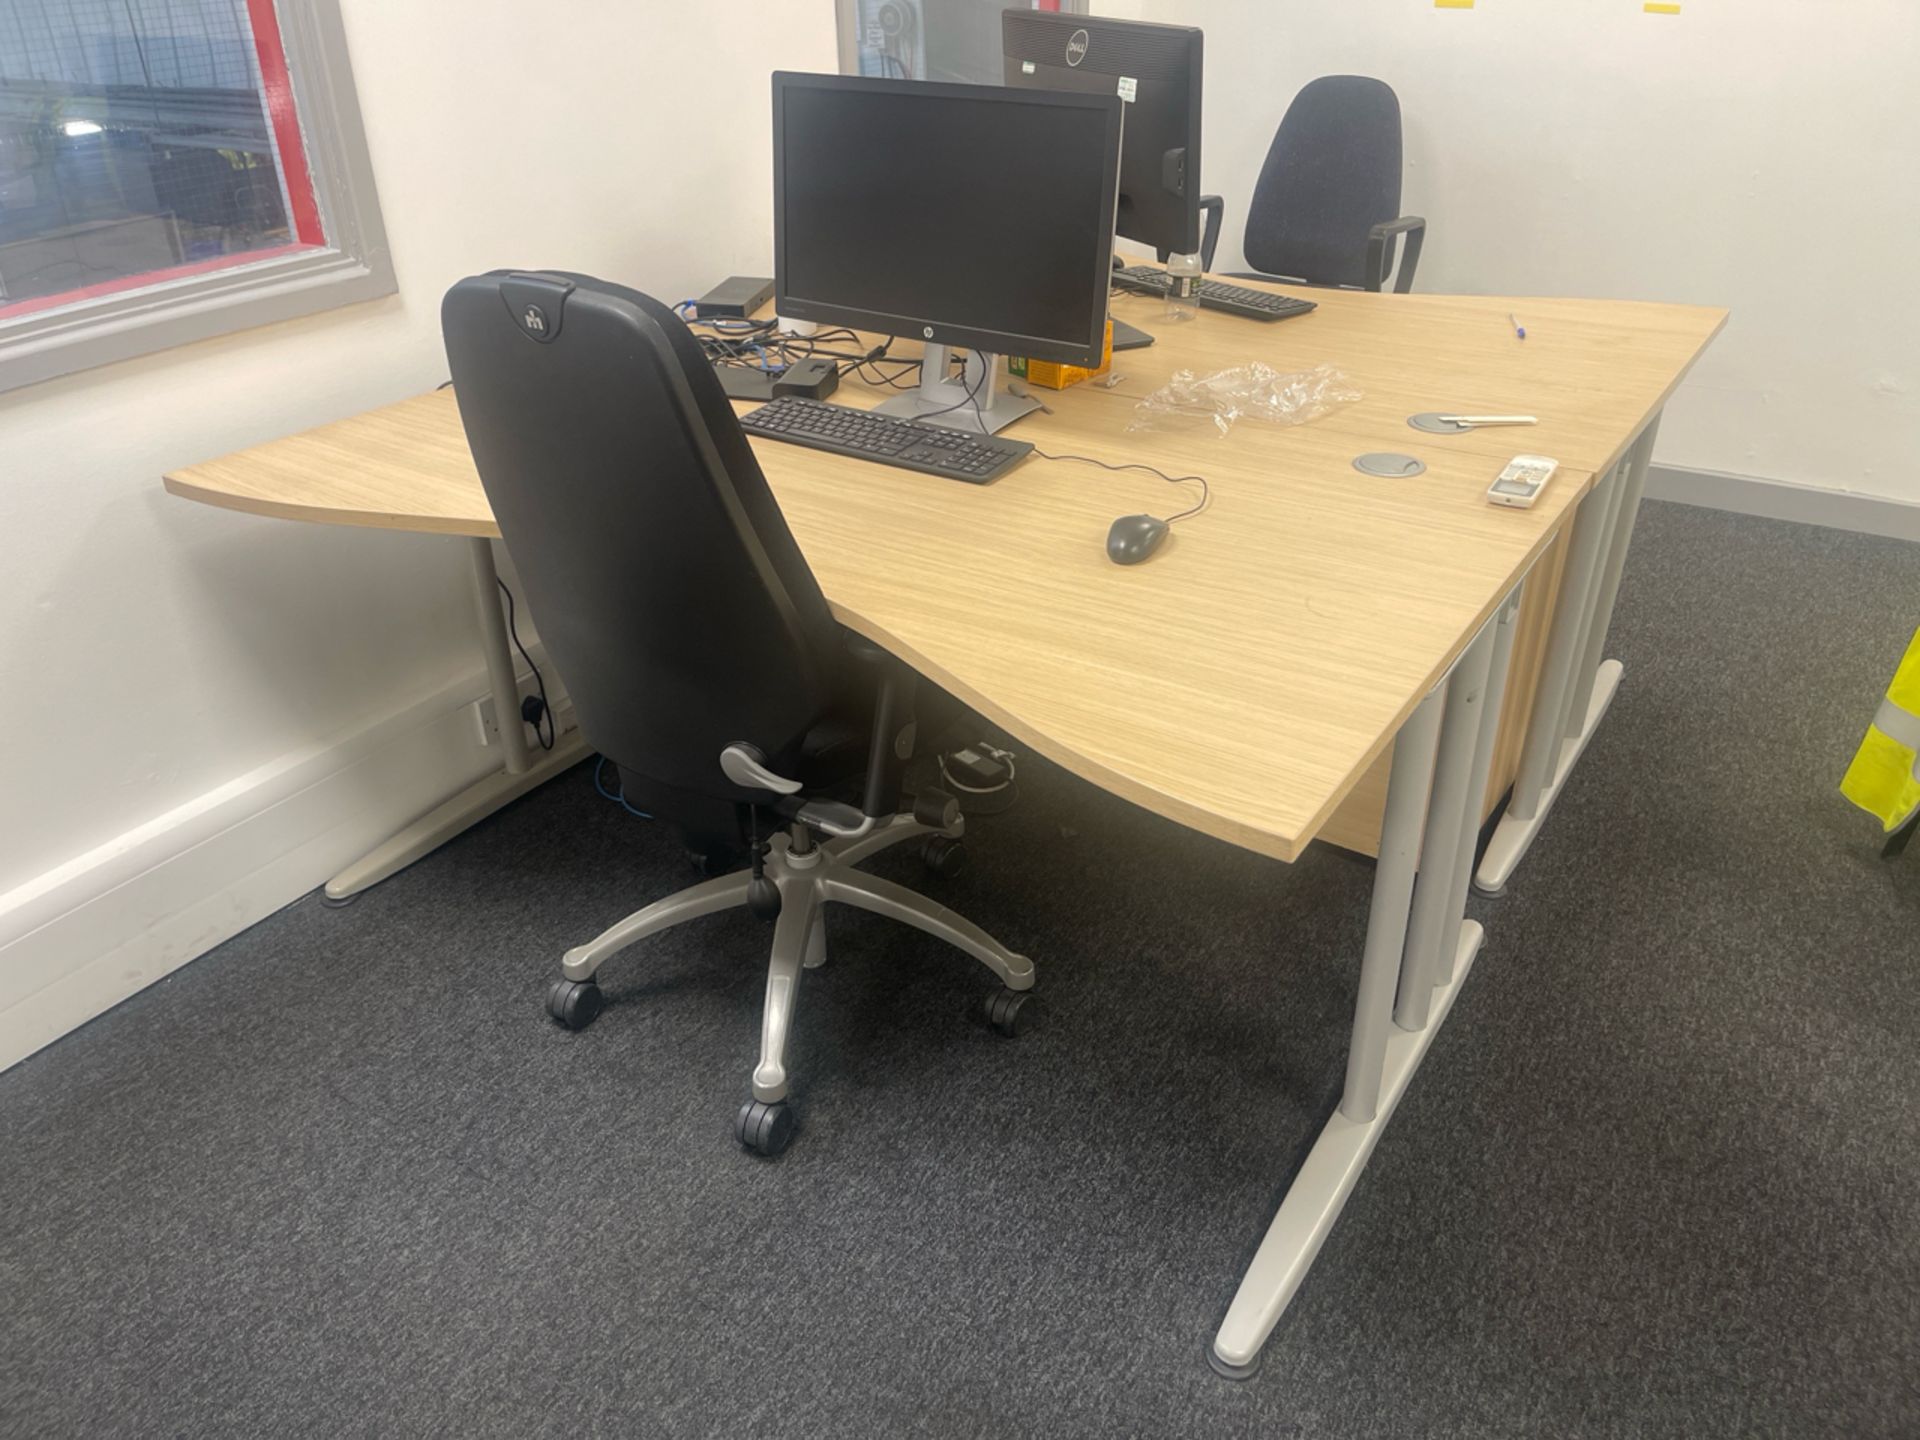 Pair Of Desks, Chairs & Computer Equipment